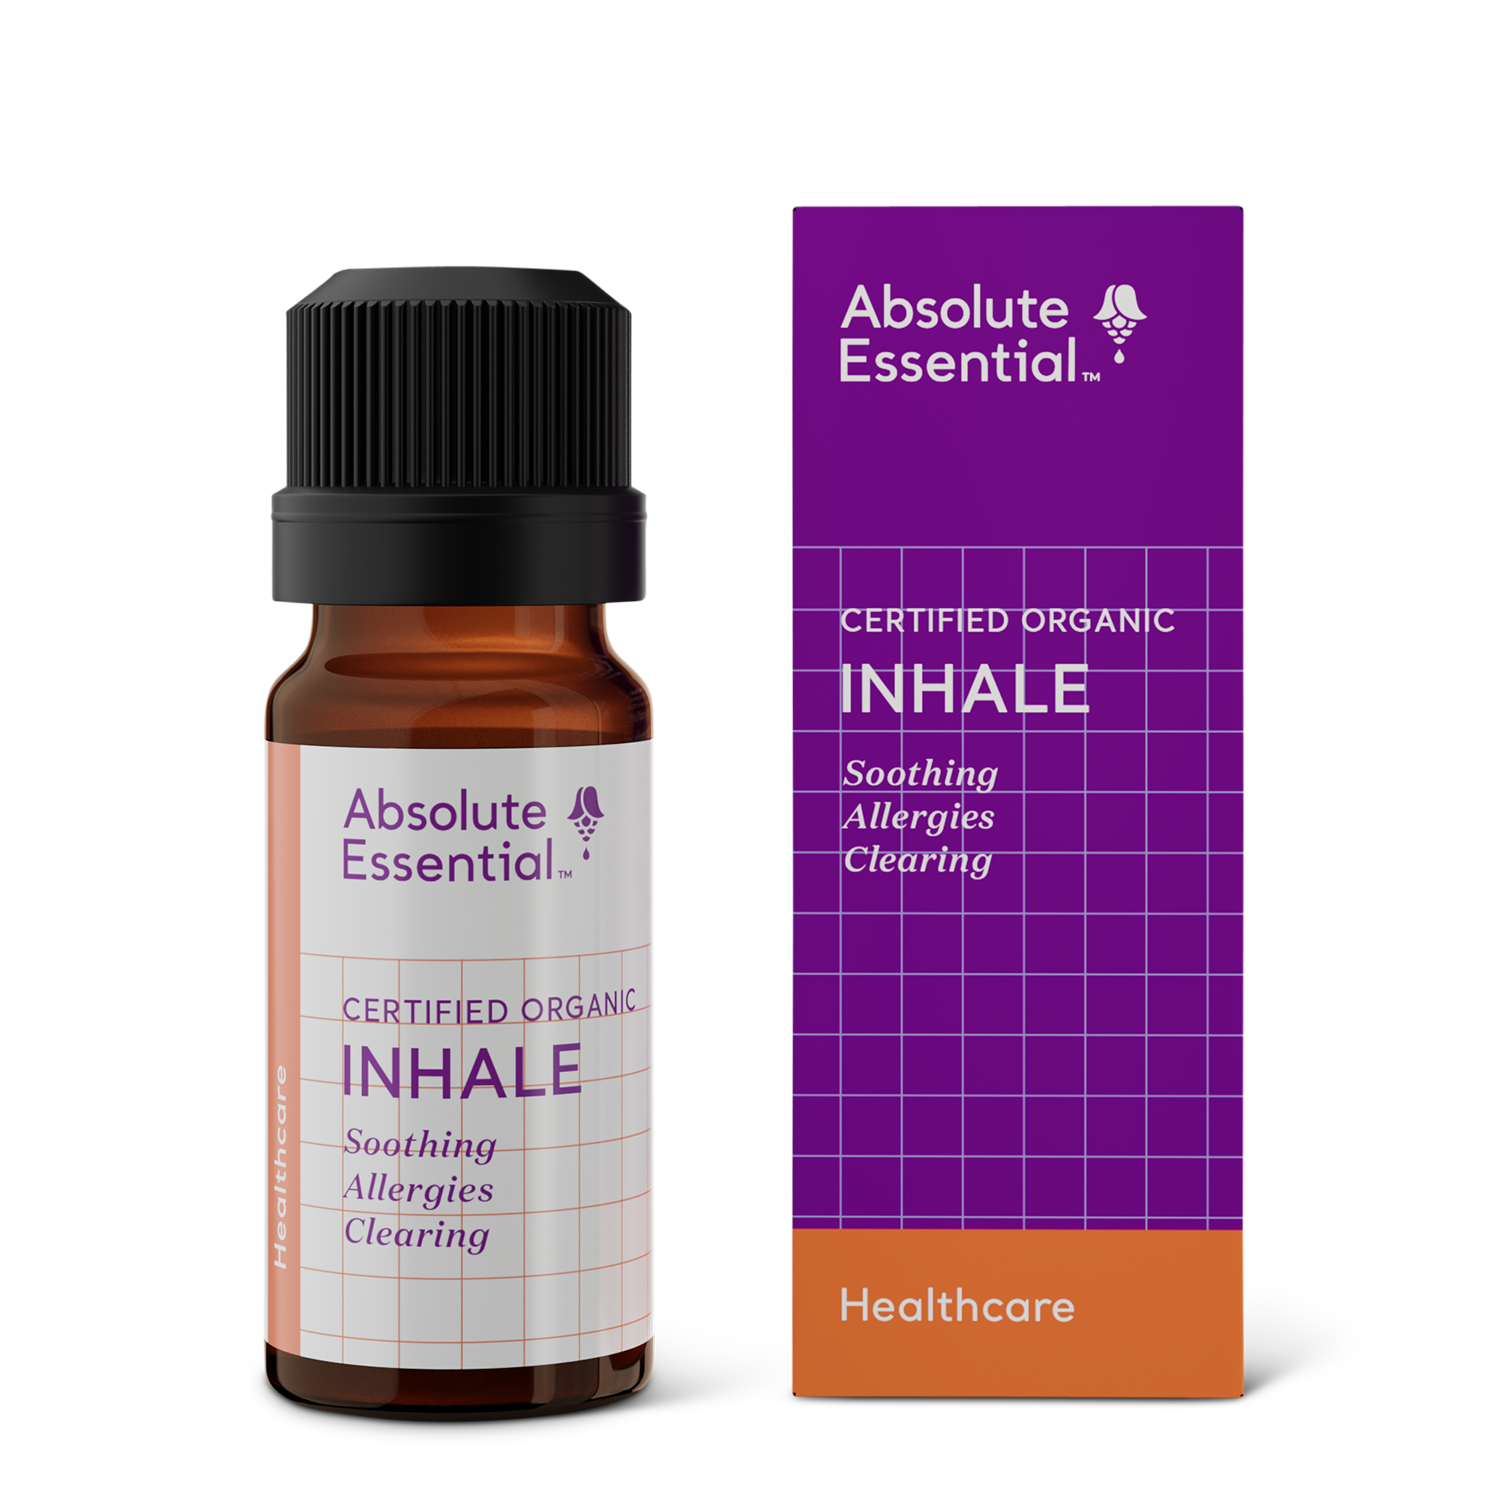 Inhale Essential Oil Blend